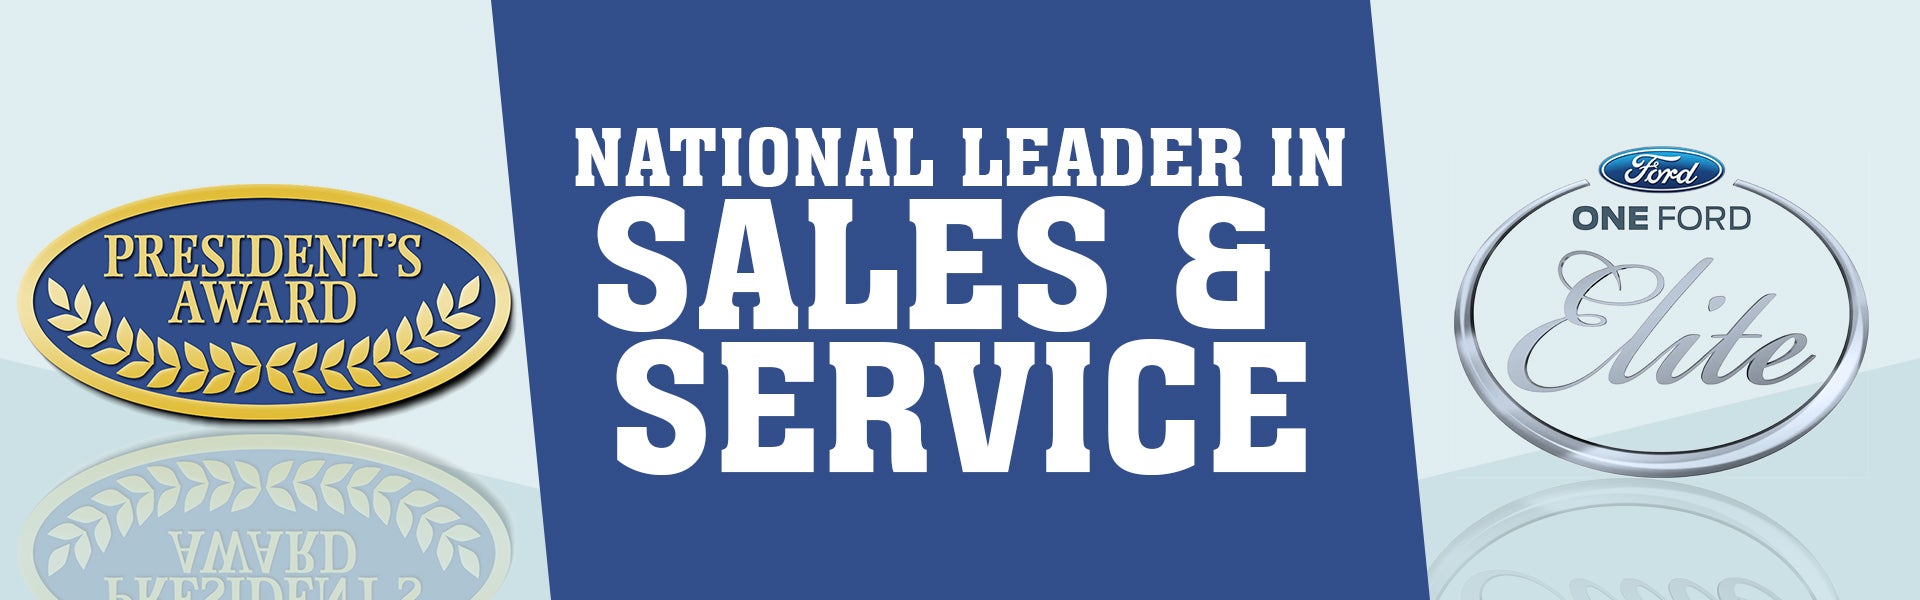 National Leader In Sales & Service 